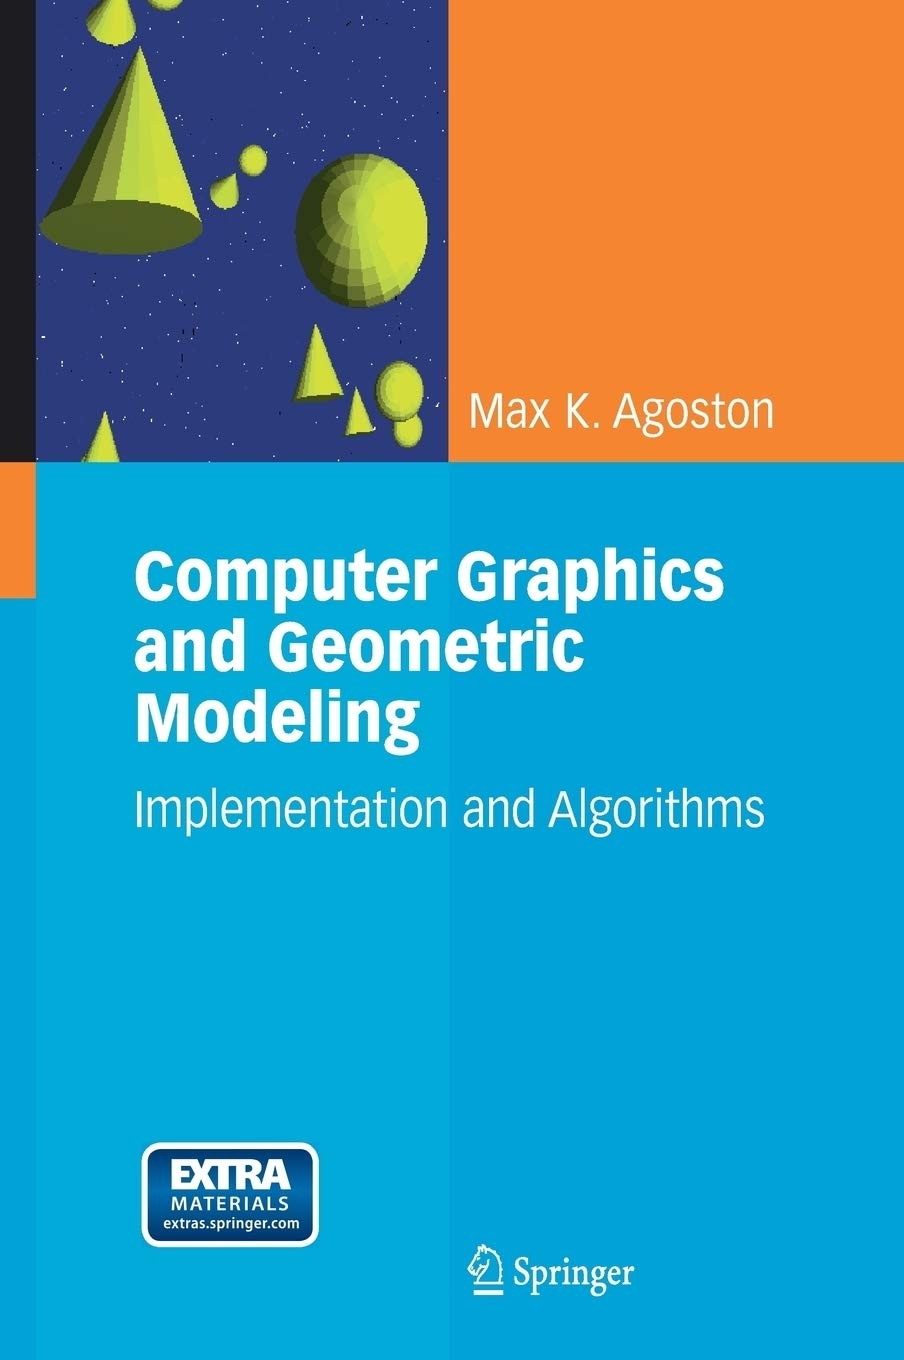 Computer Graphics and Geometric Modelling: Mathematics